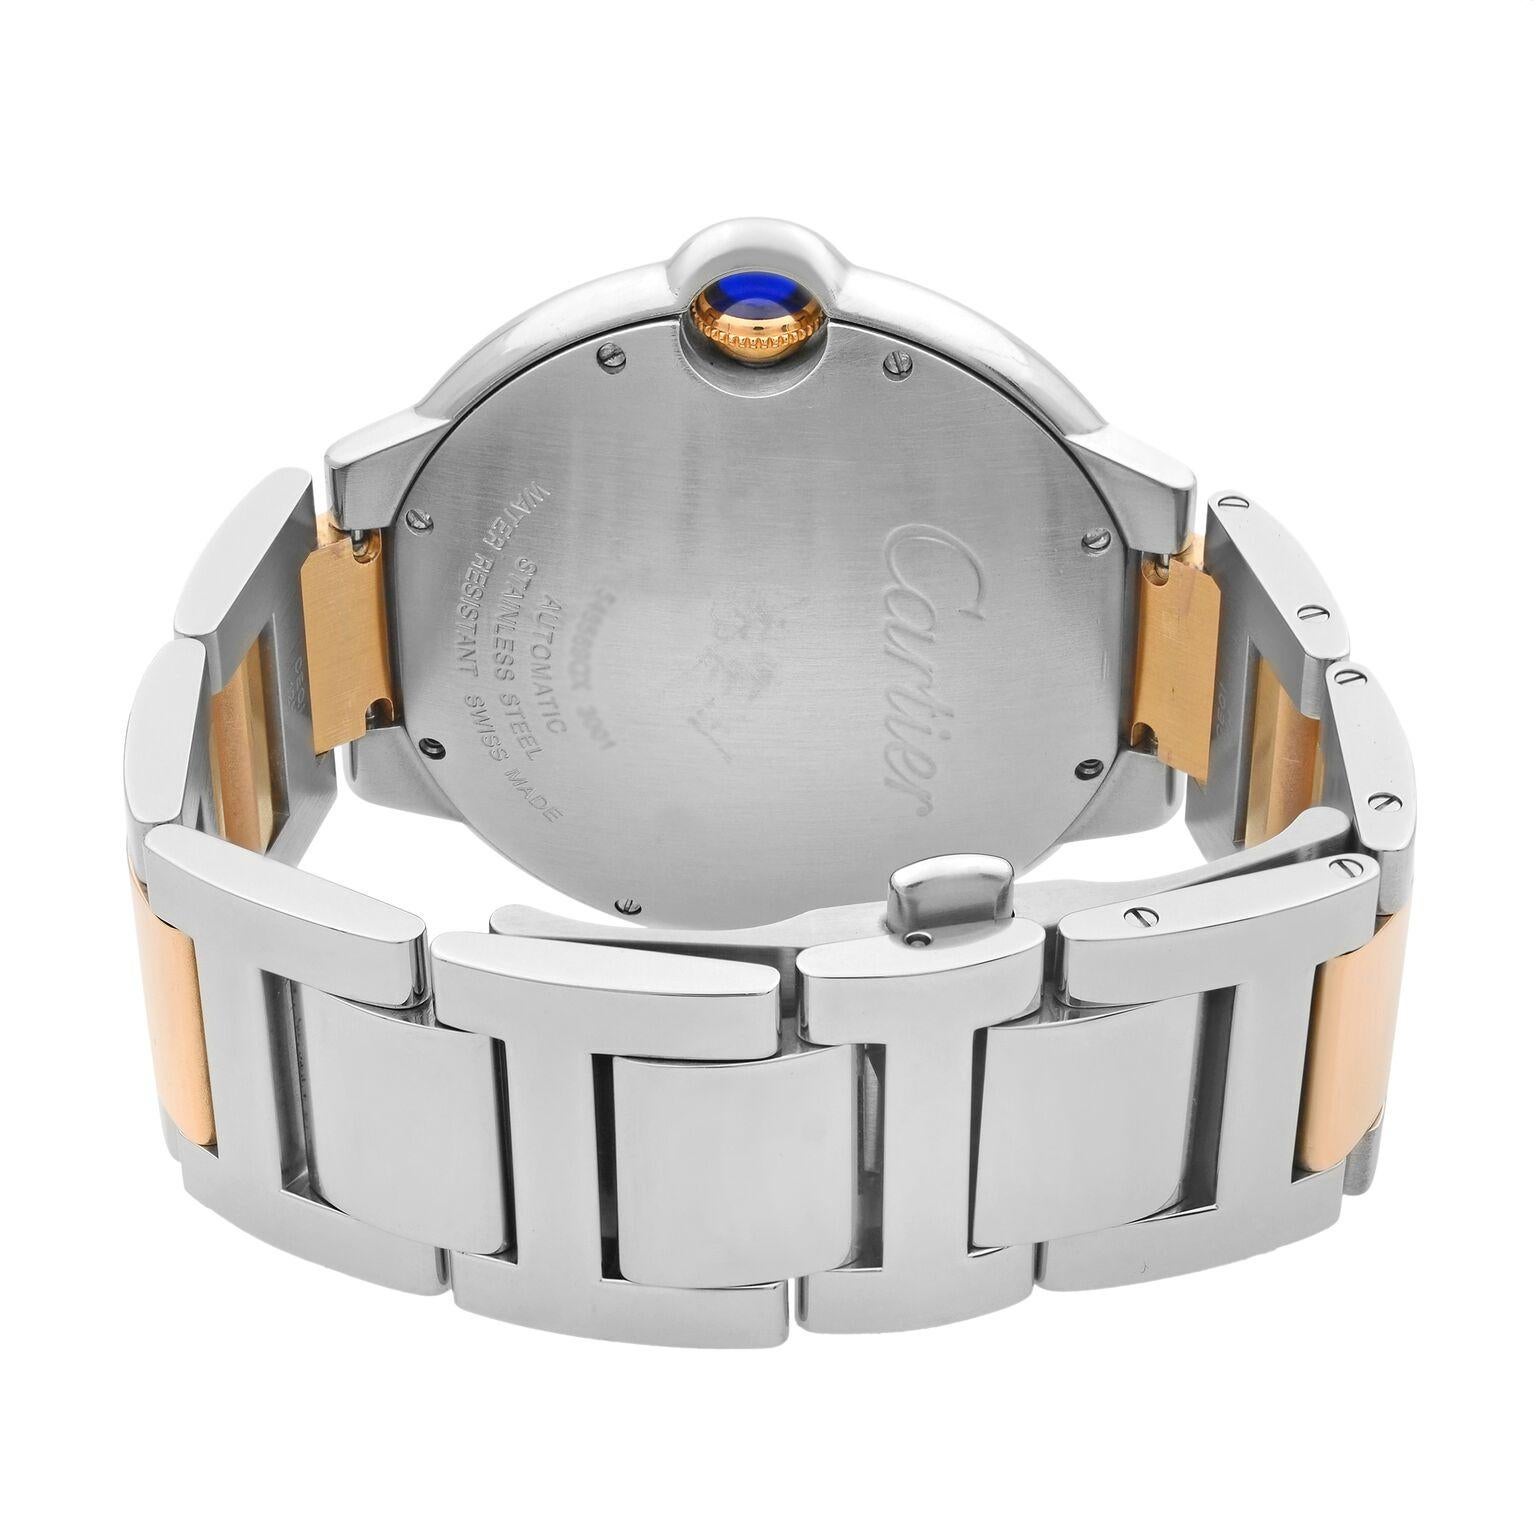 Cartier Ballon Bleu Gold Steel Chocolate Dial Automatic Men's Watch W6920032 2